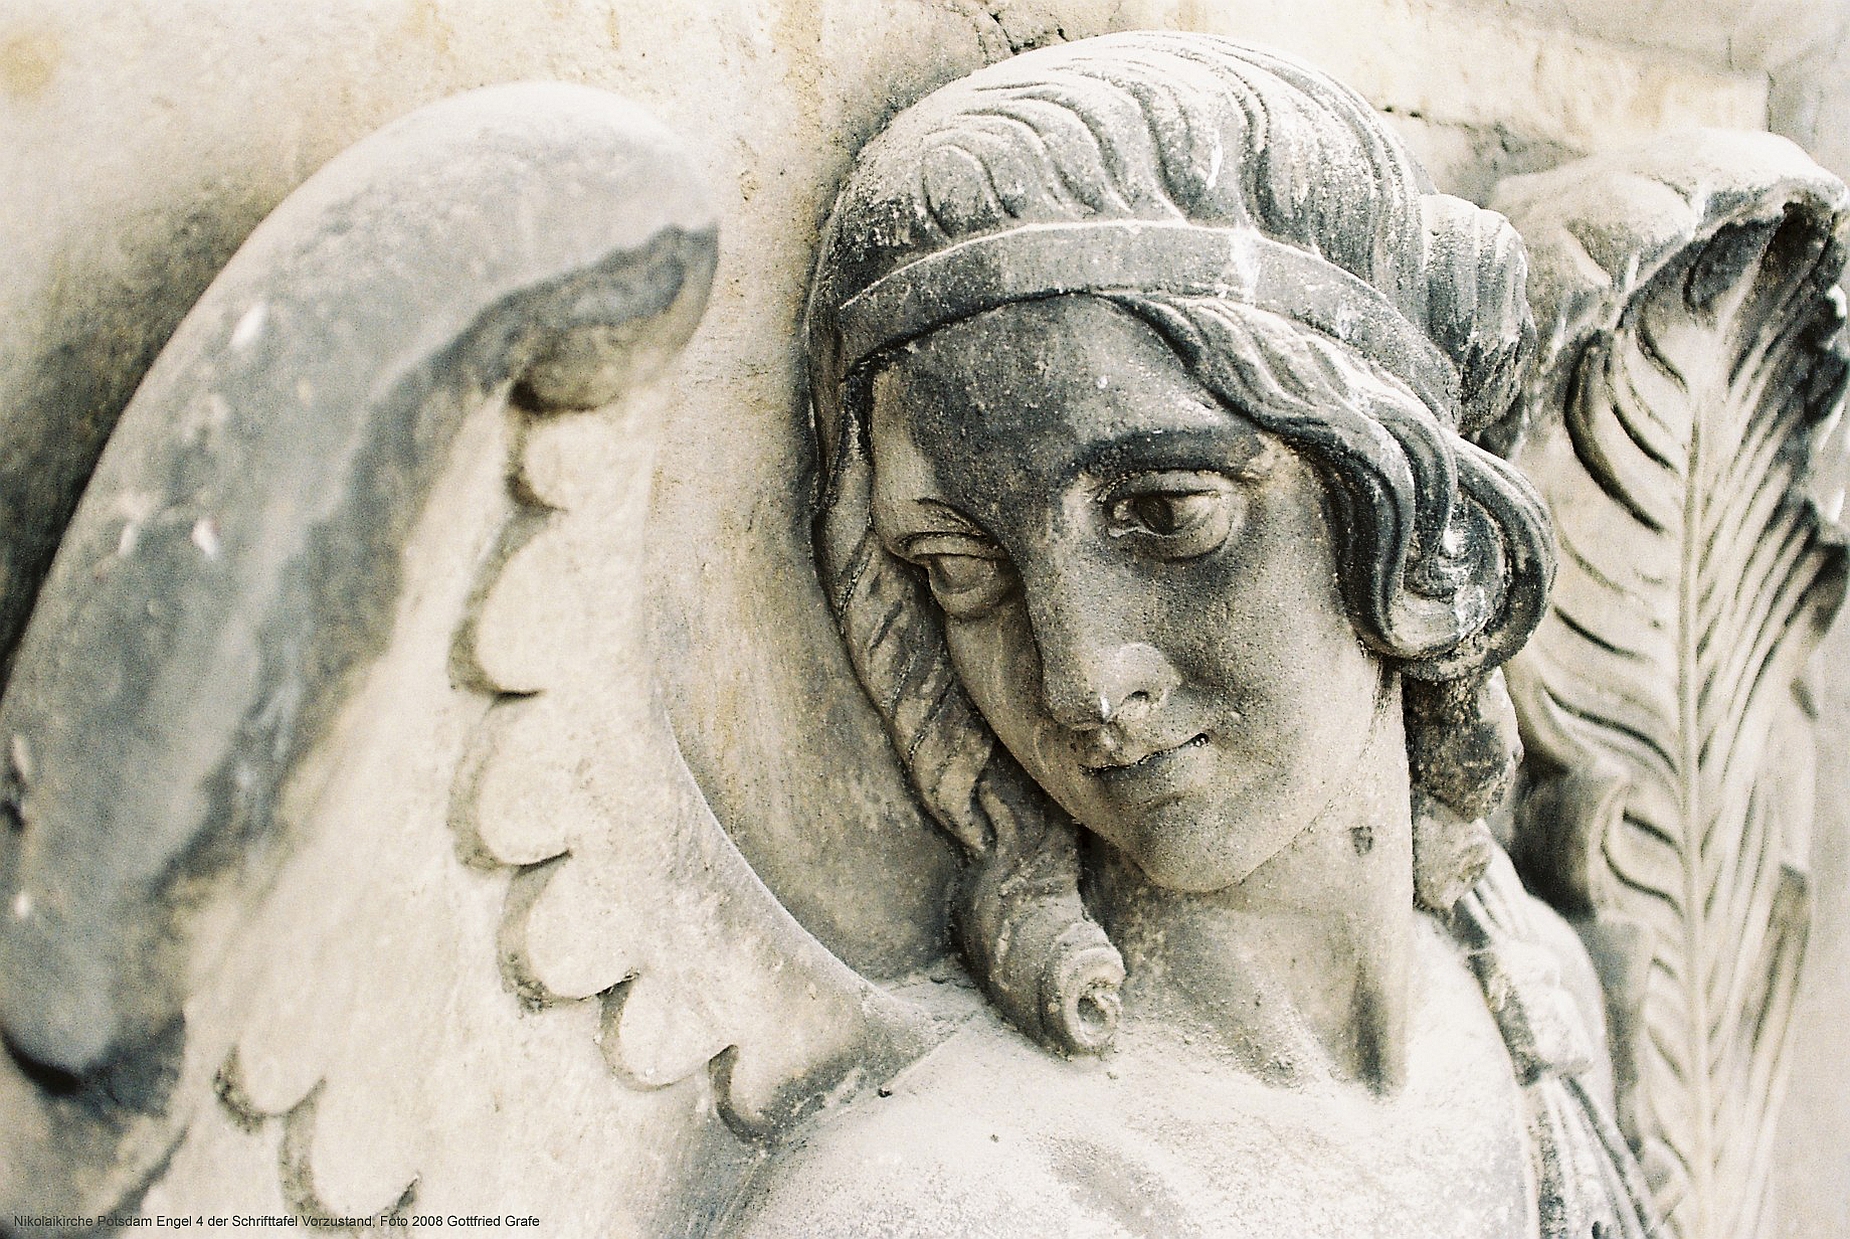 Man Made Angel Statue 1850x1239